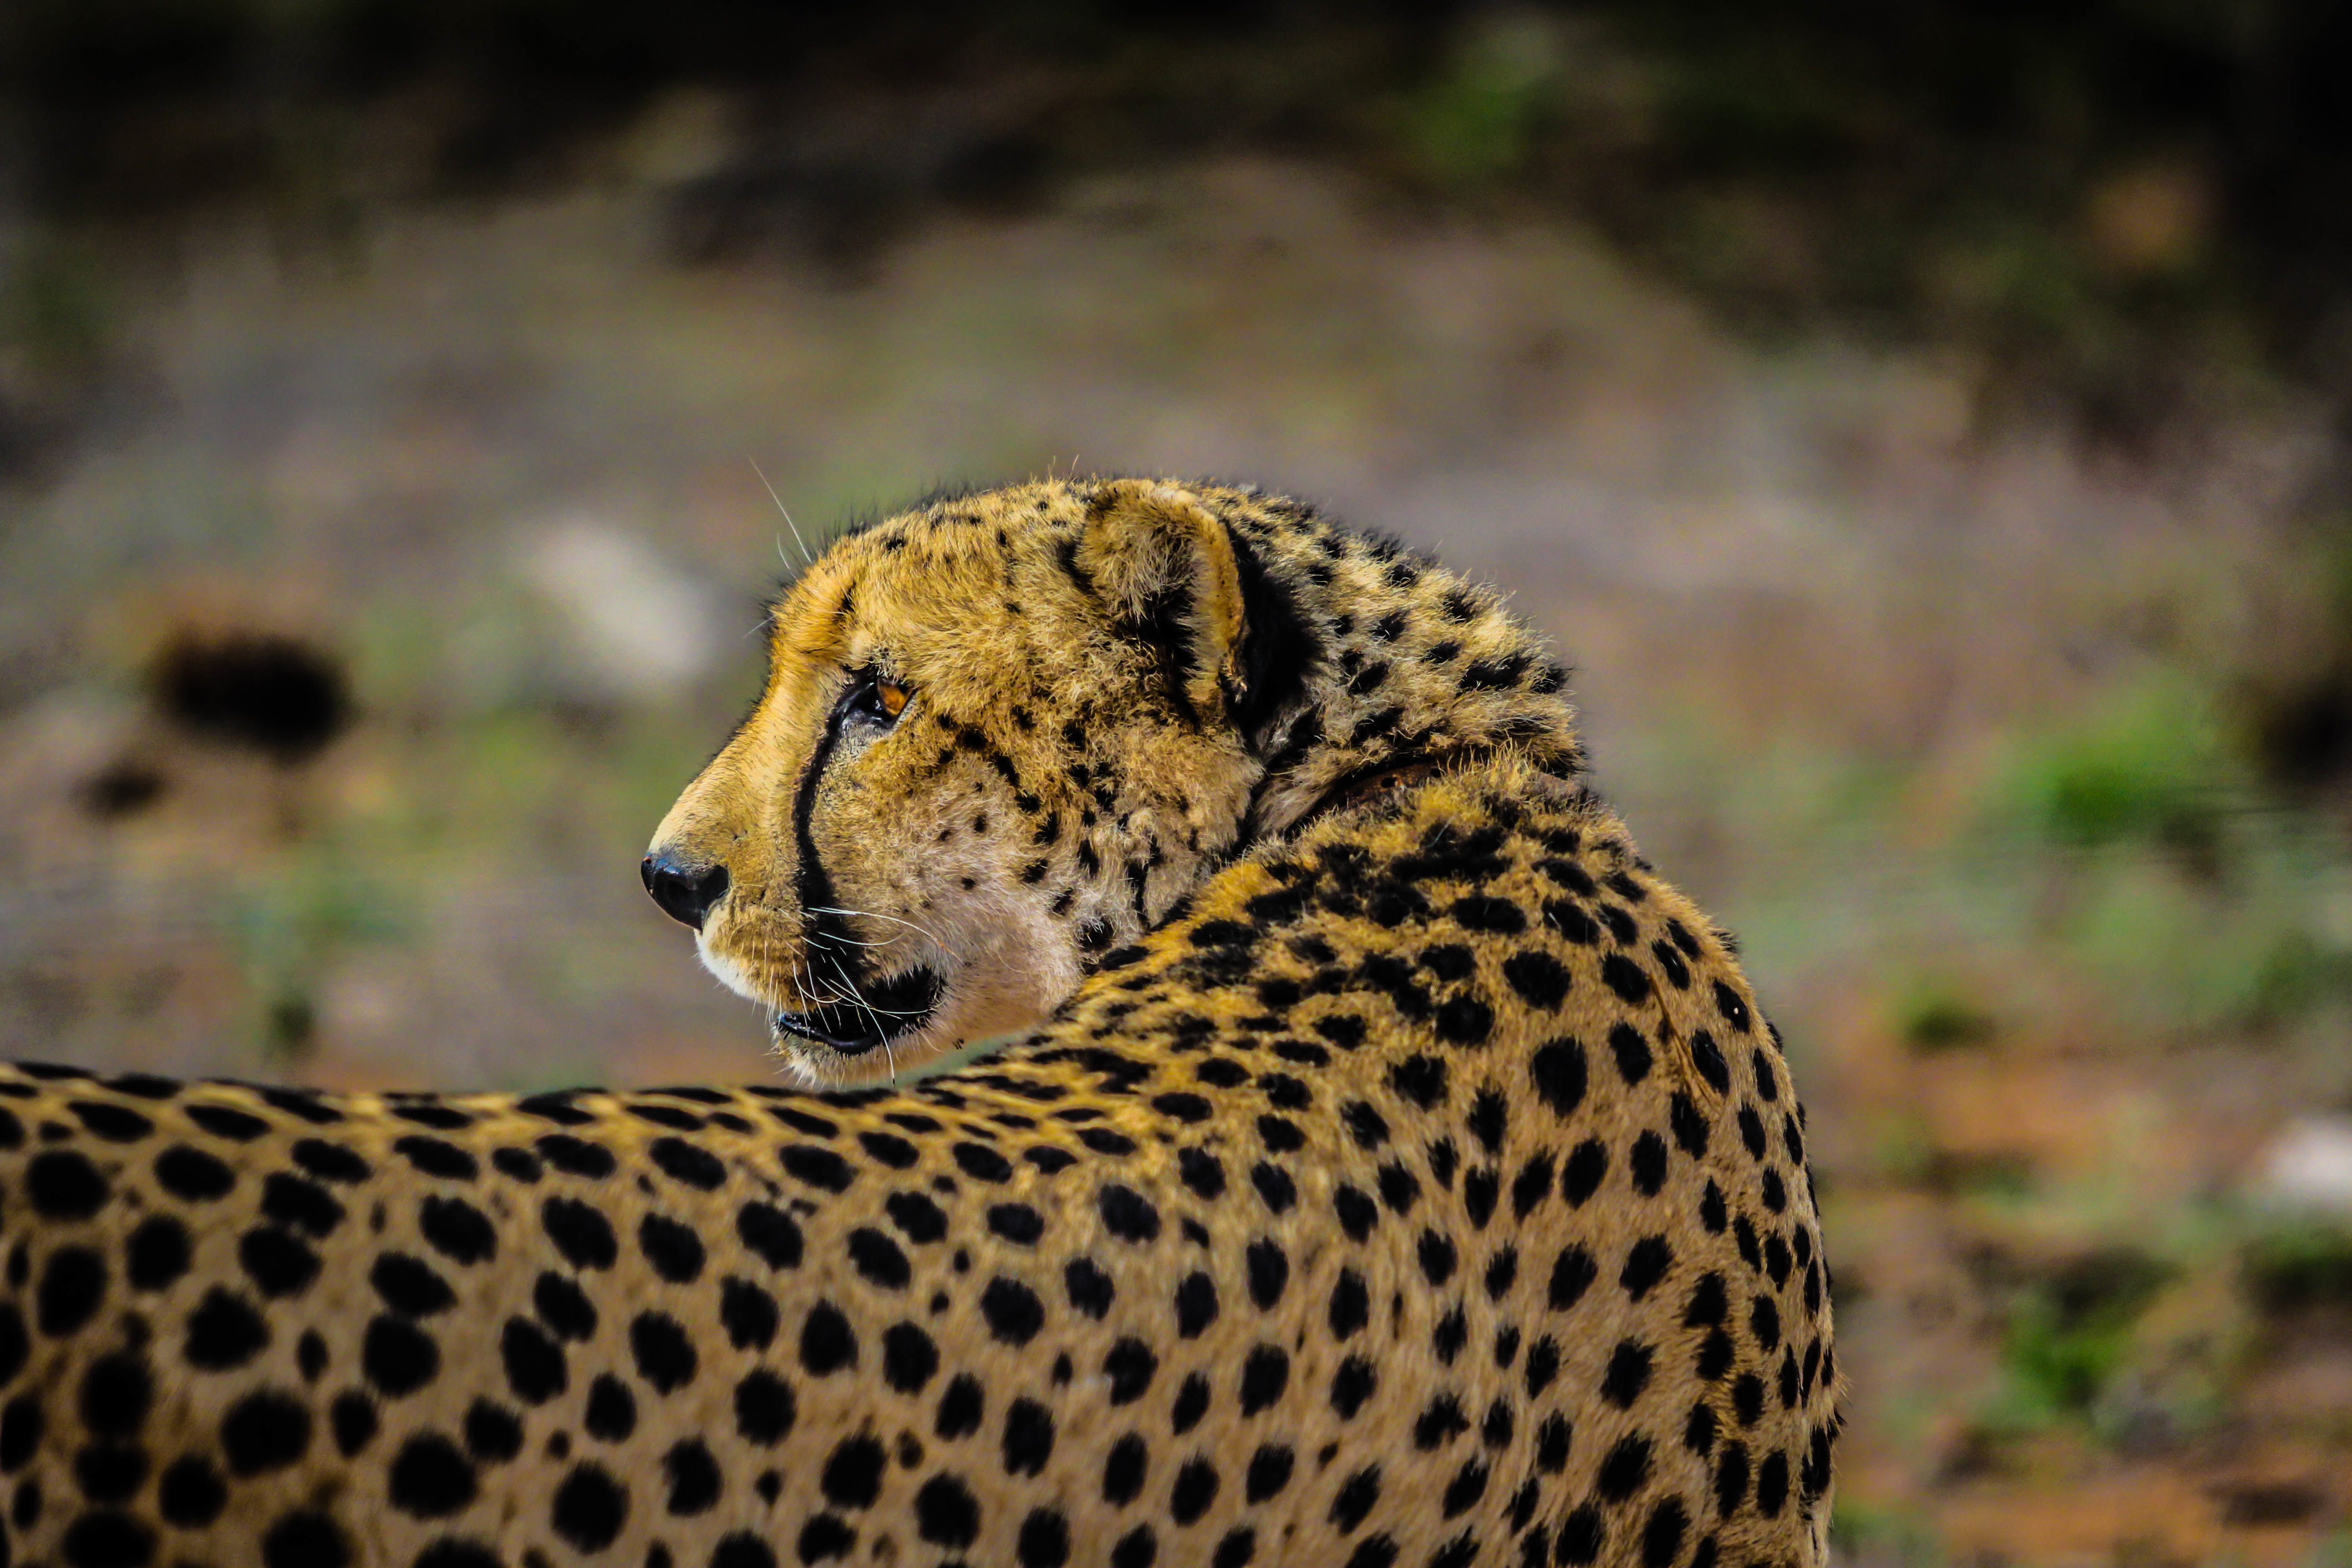 The cheetah looks back